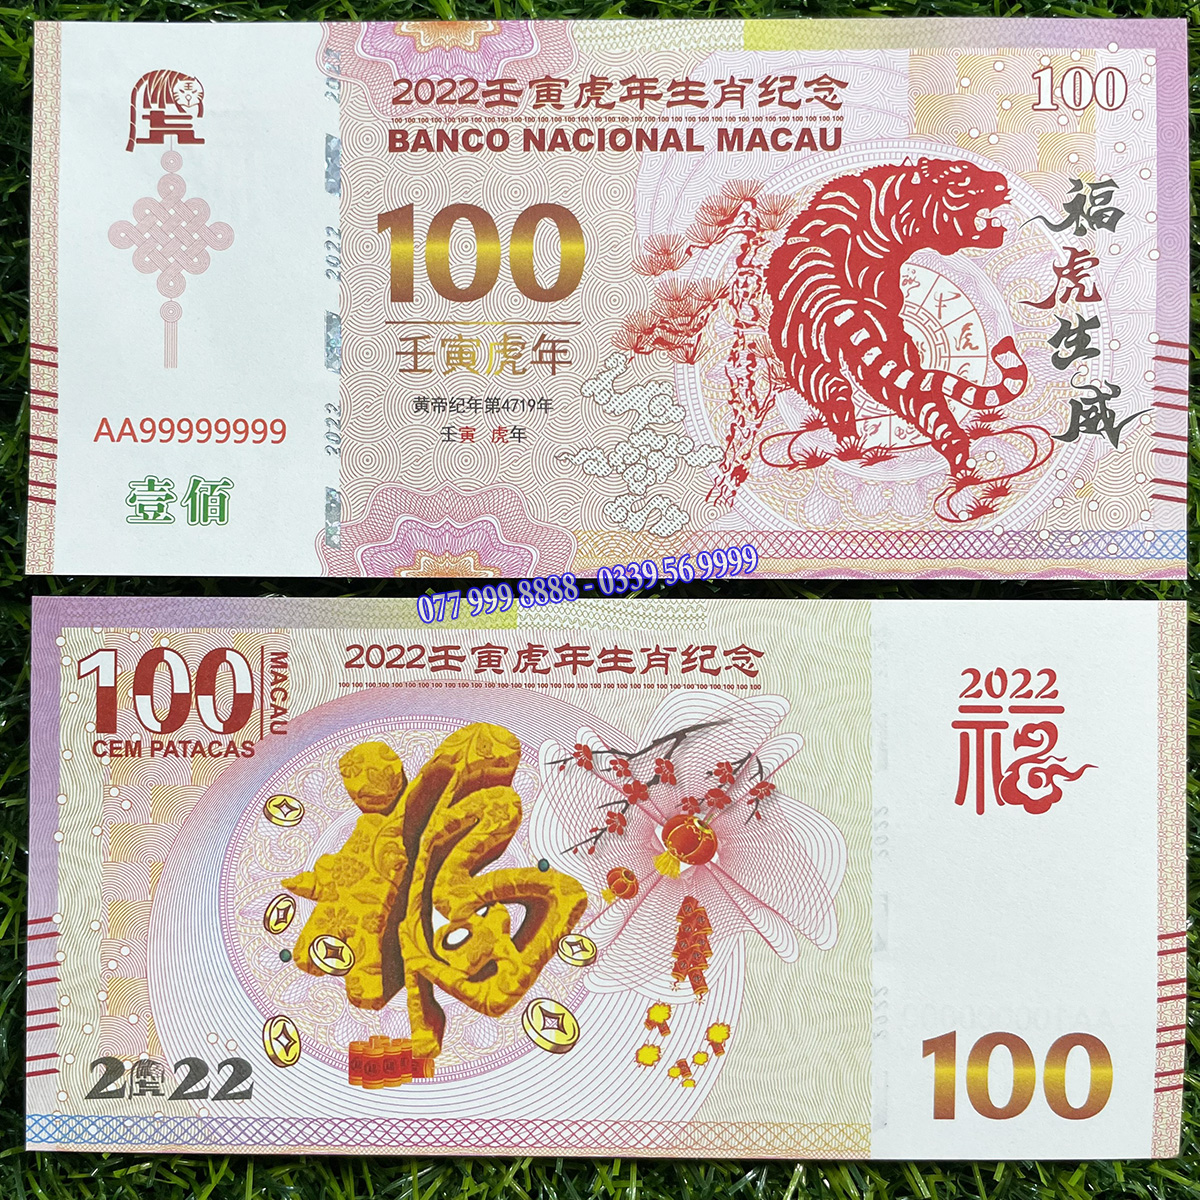 tiền hổ 100 macao